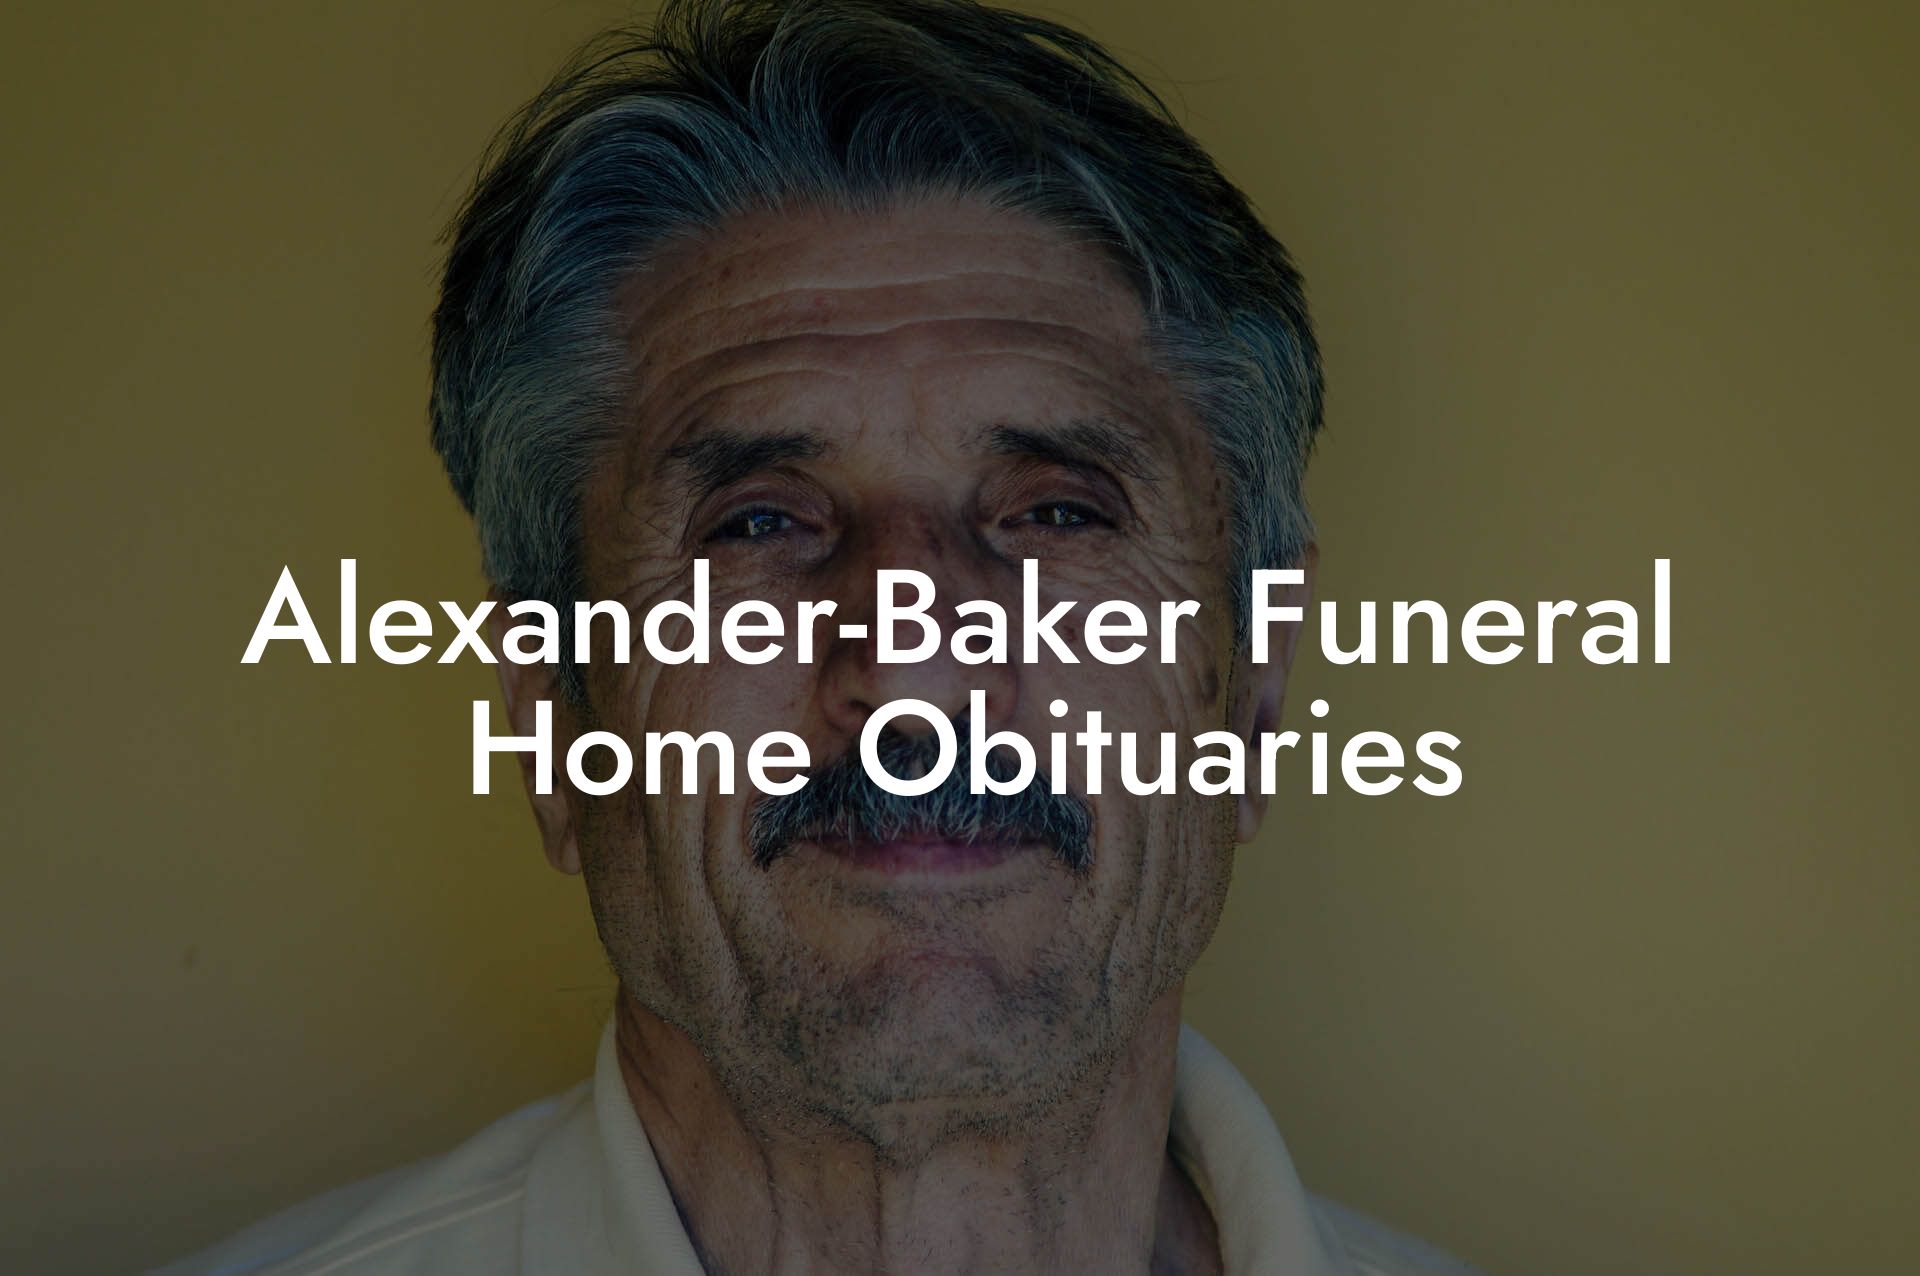 Alexander-Baker Funeral Home Obituaries